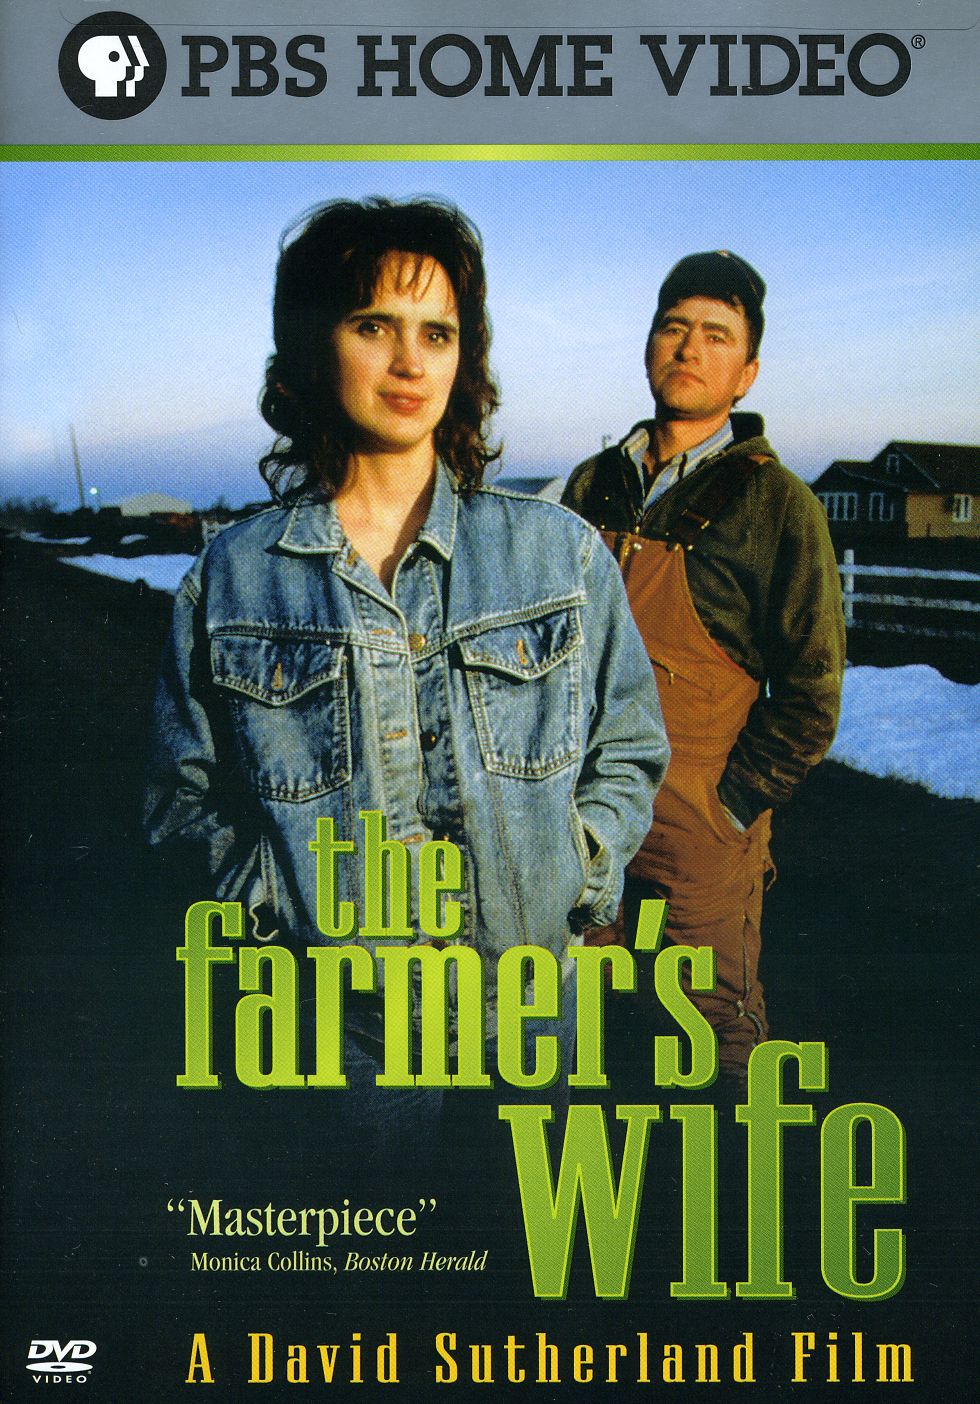 FRONTLINE: FARMER'S WIFE - DAVID SUTHERLAND FILM